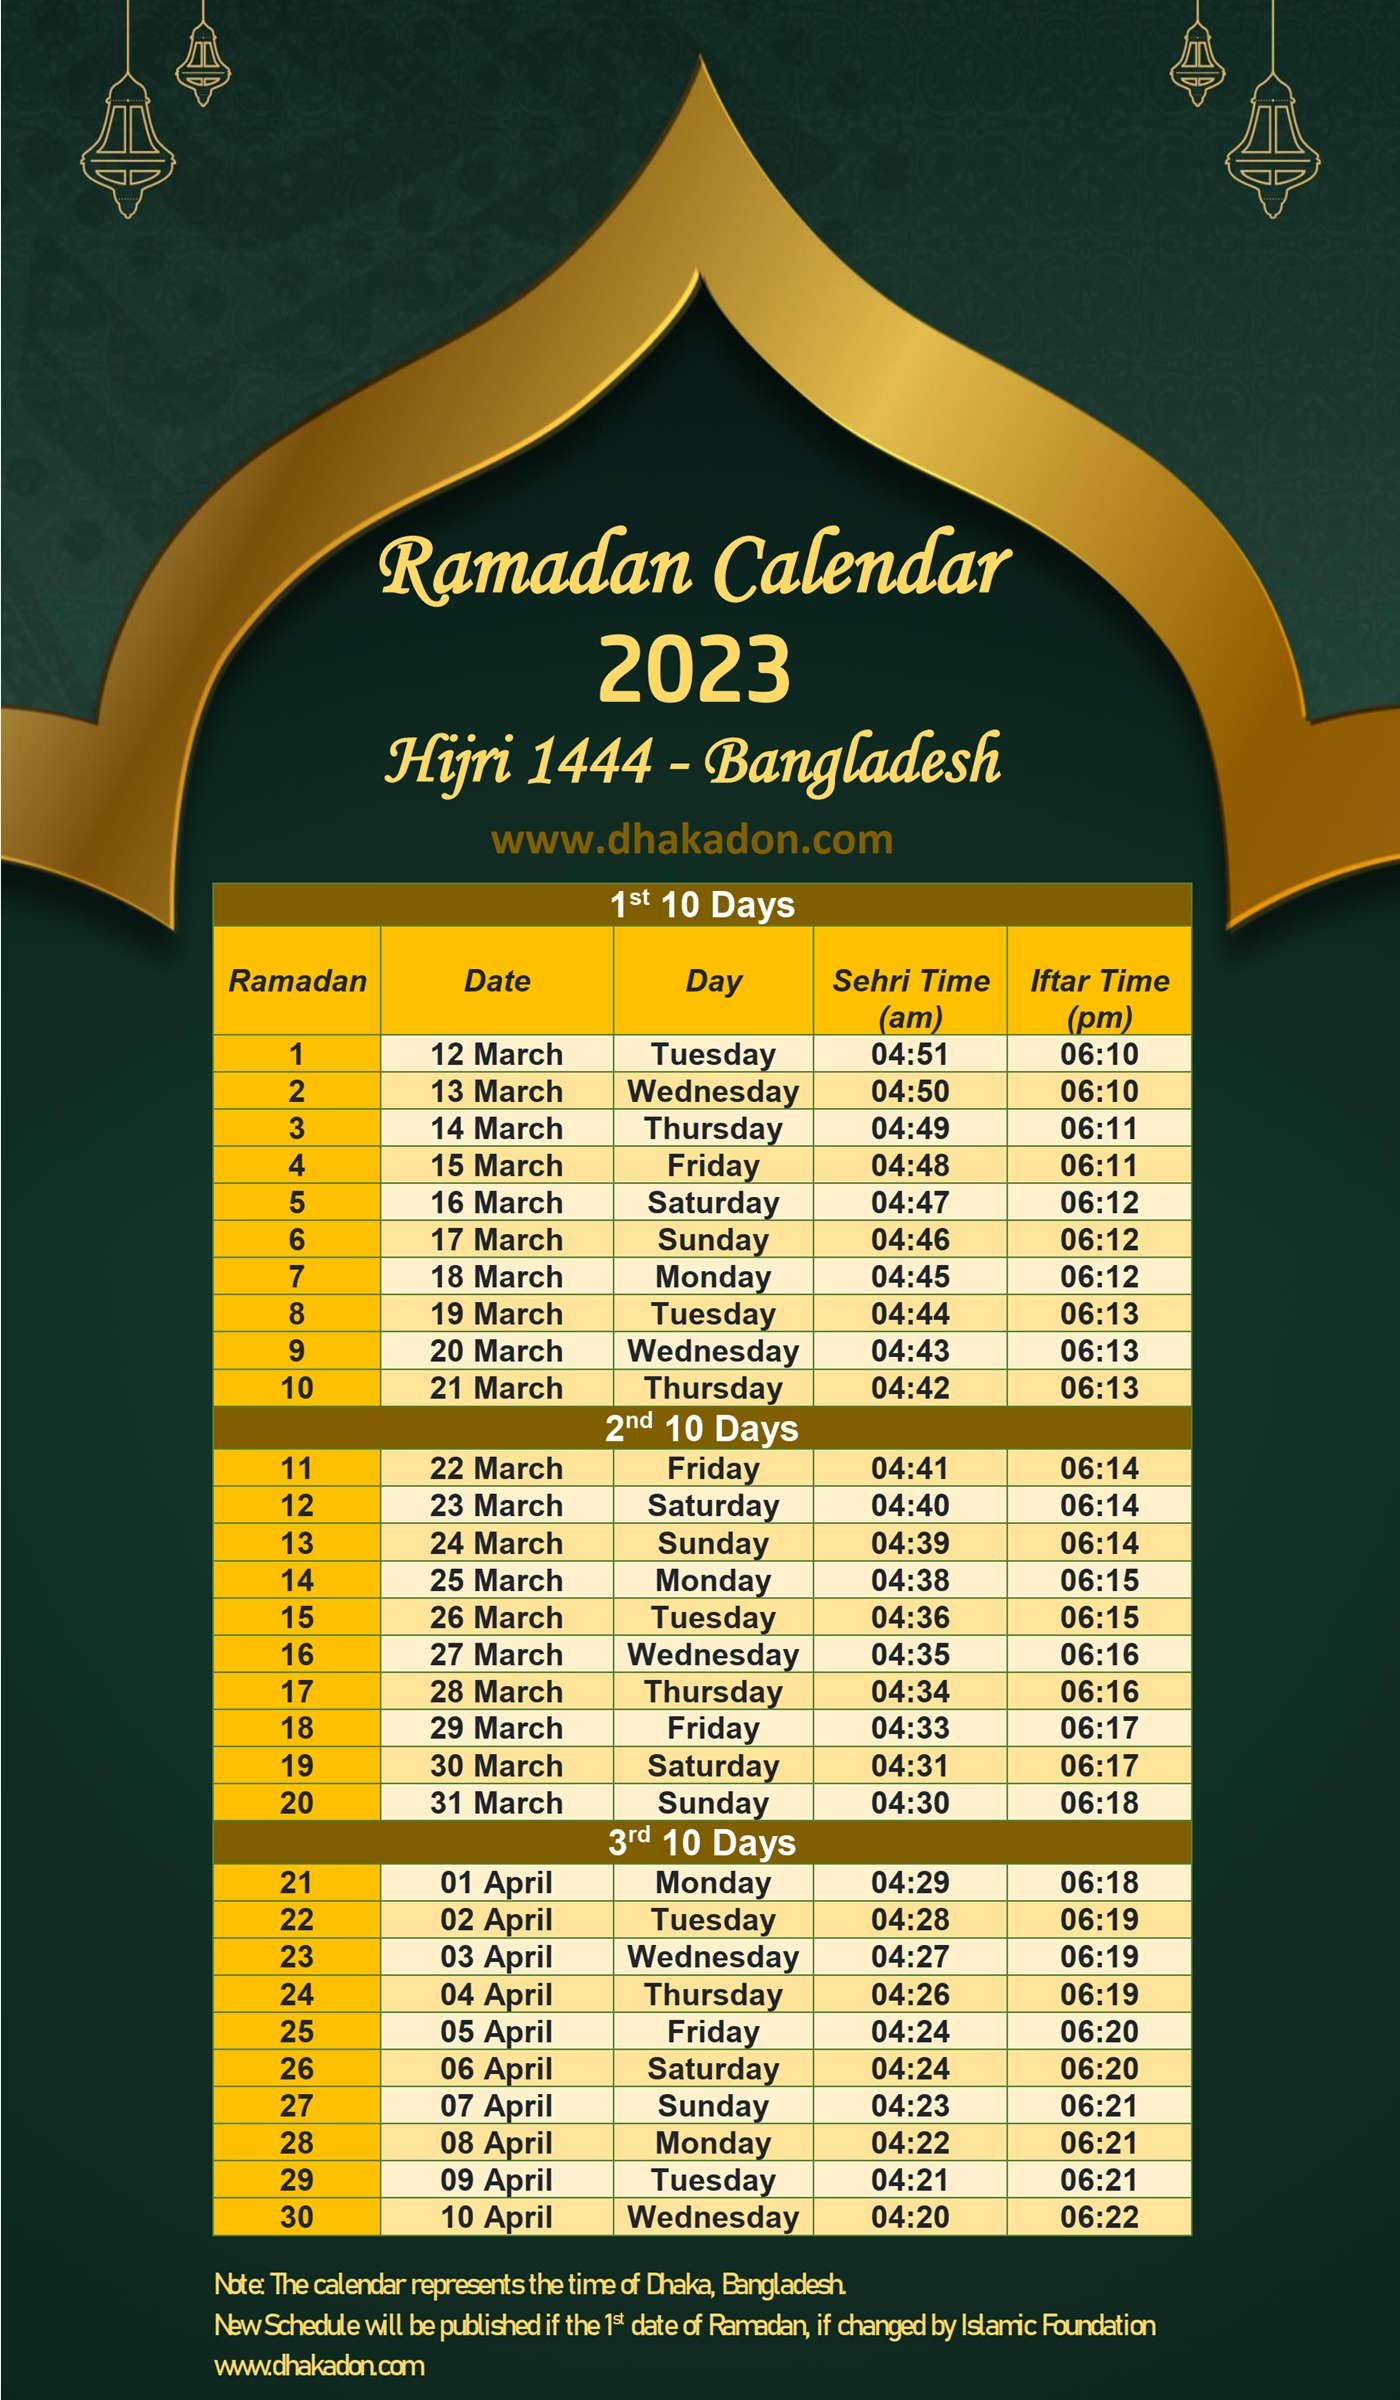 Ramadan 2024 Calendar Bangladesh Sehri & Iftar Time Schedule